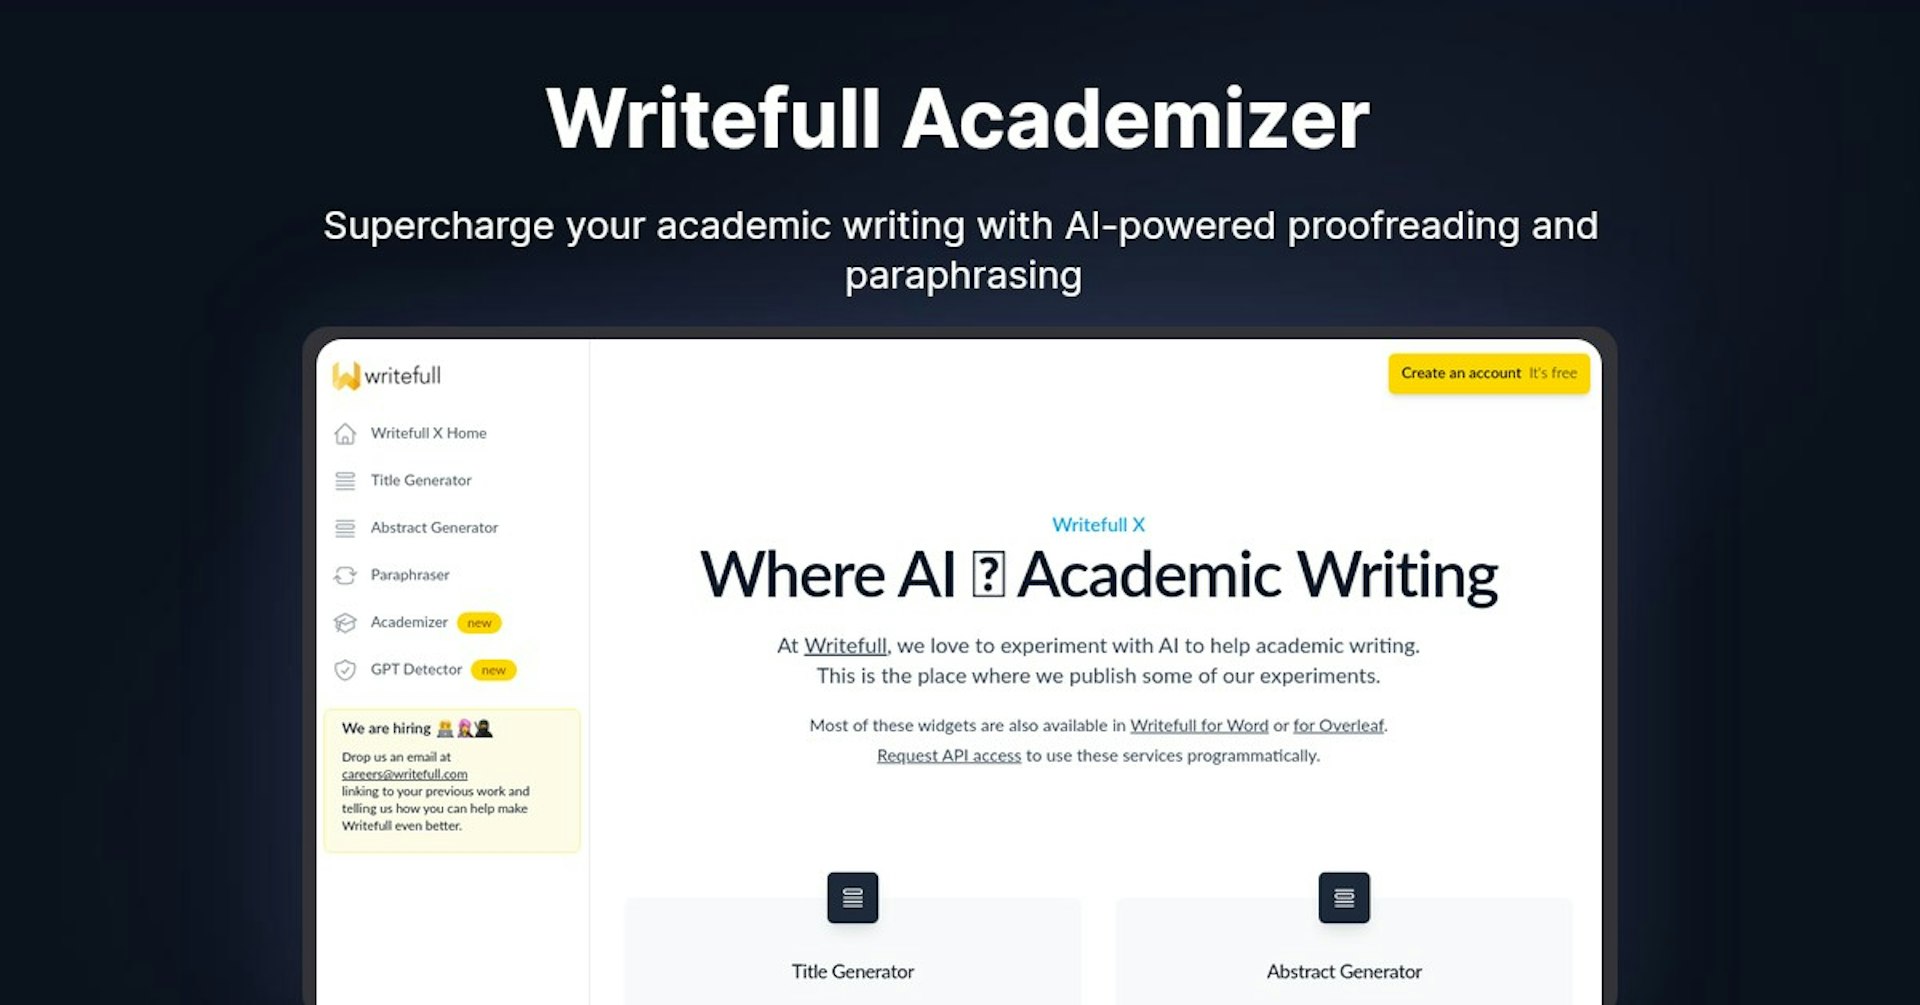 Writefull Academizer